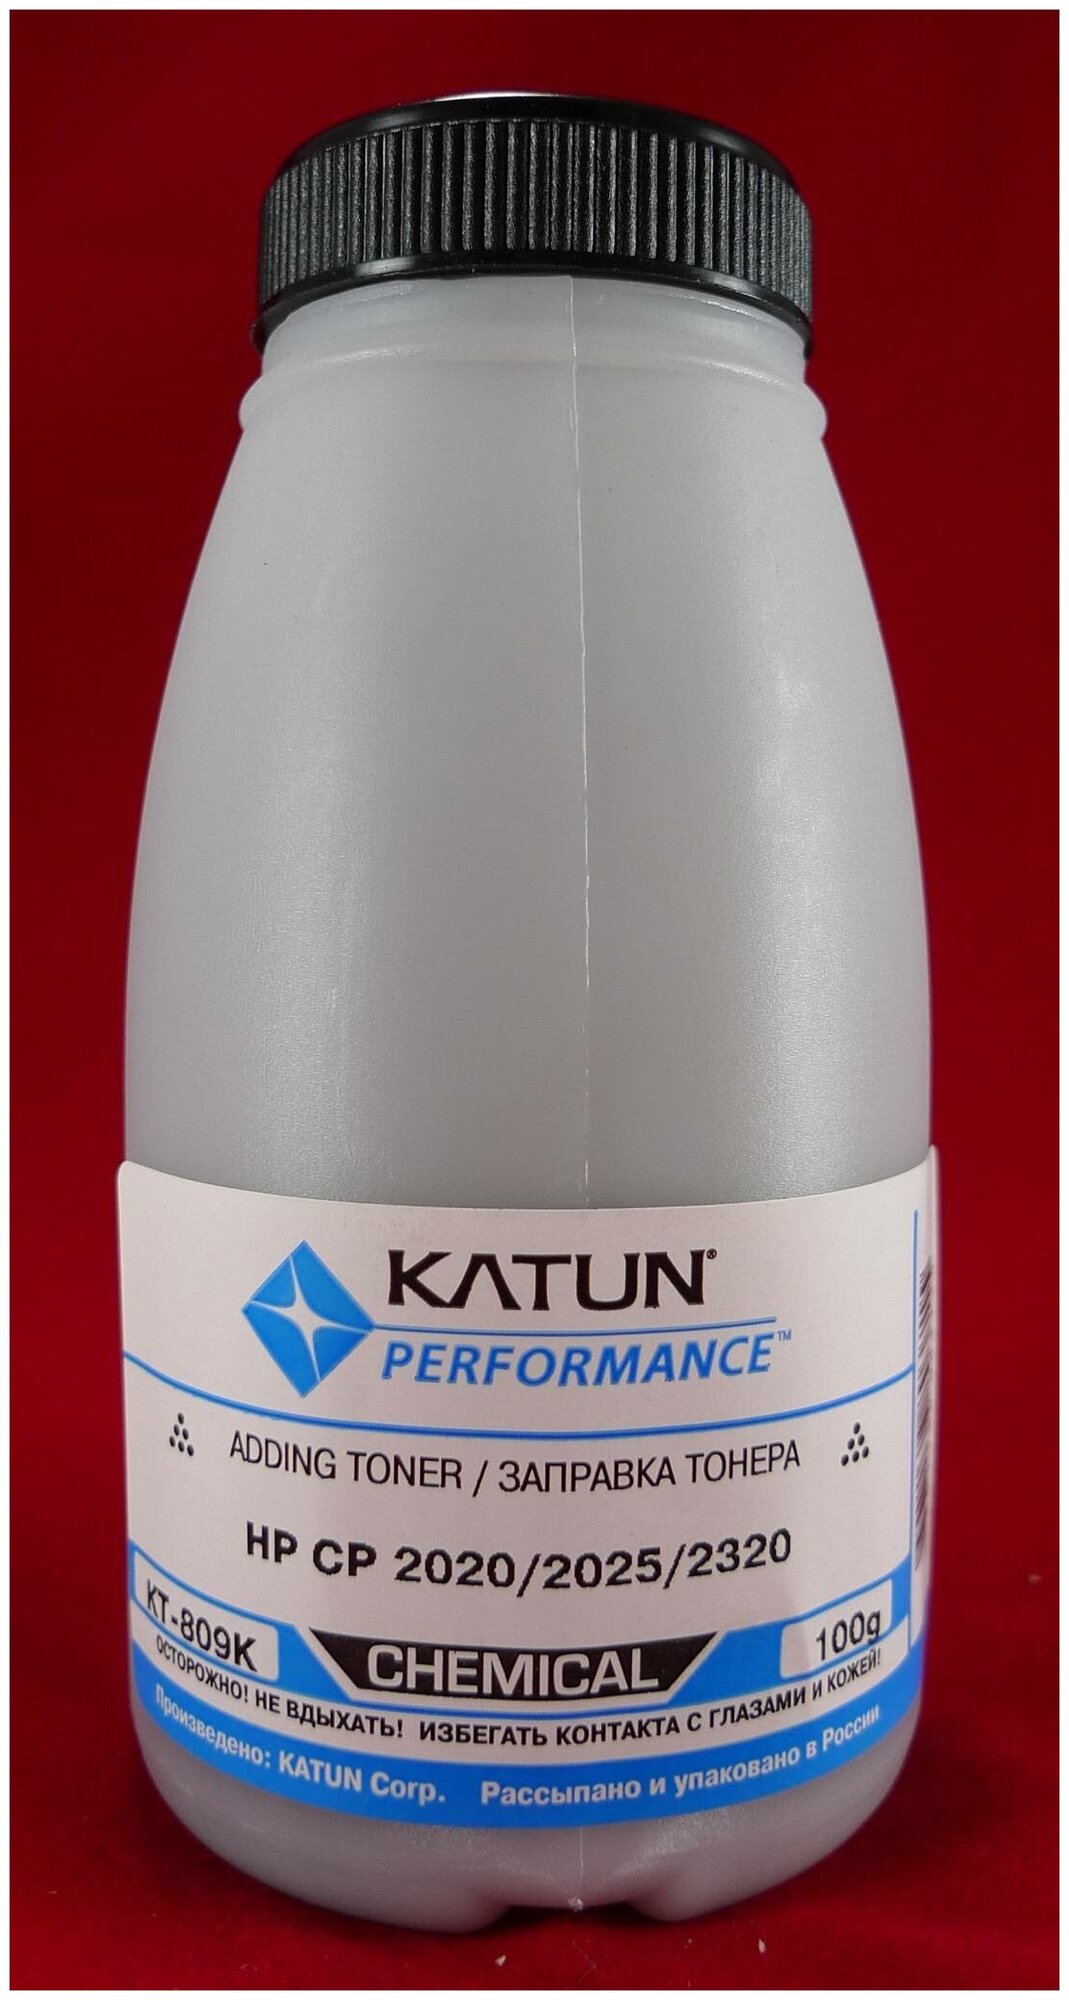 Тонер Katun для картриджей CC530A/CE410A Black, химический